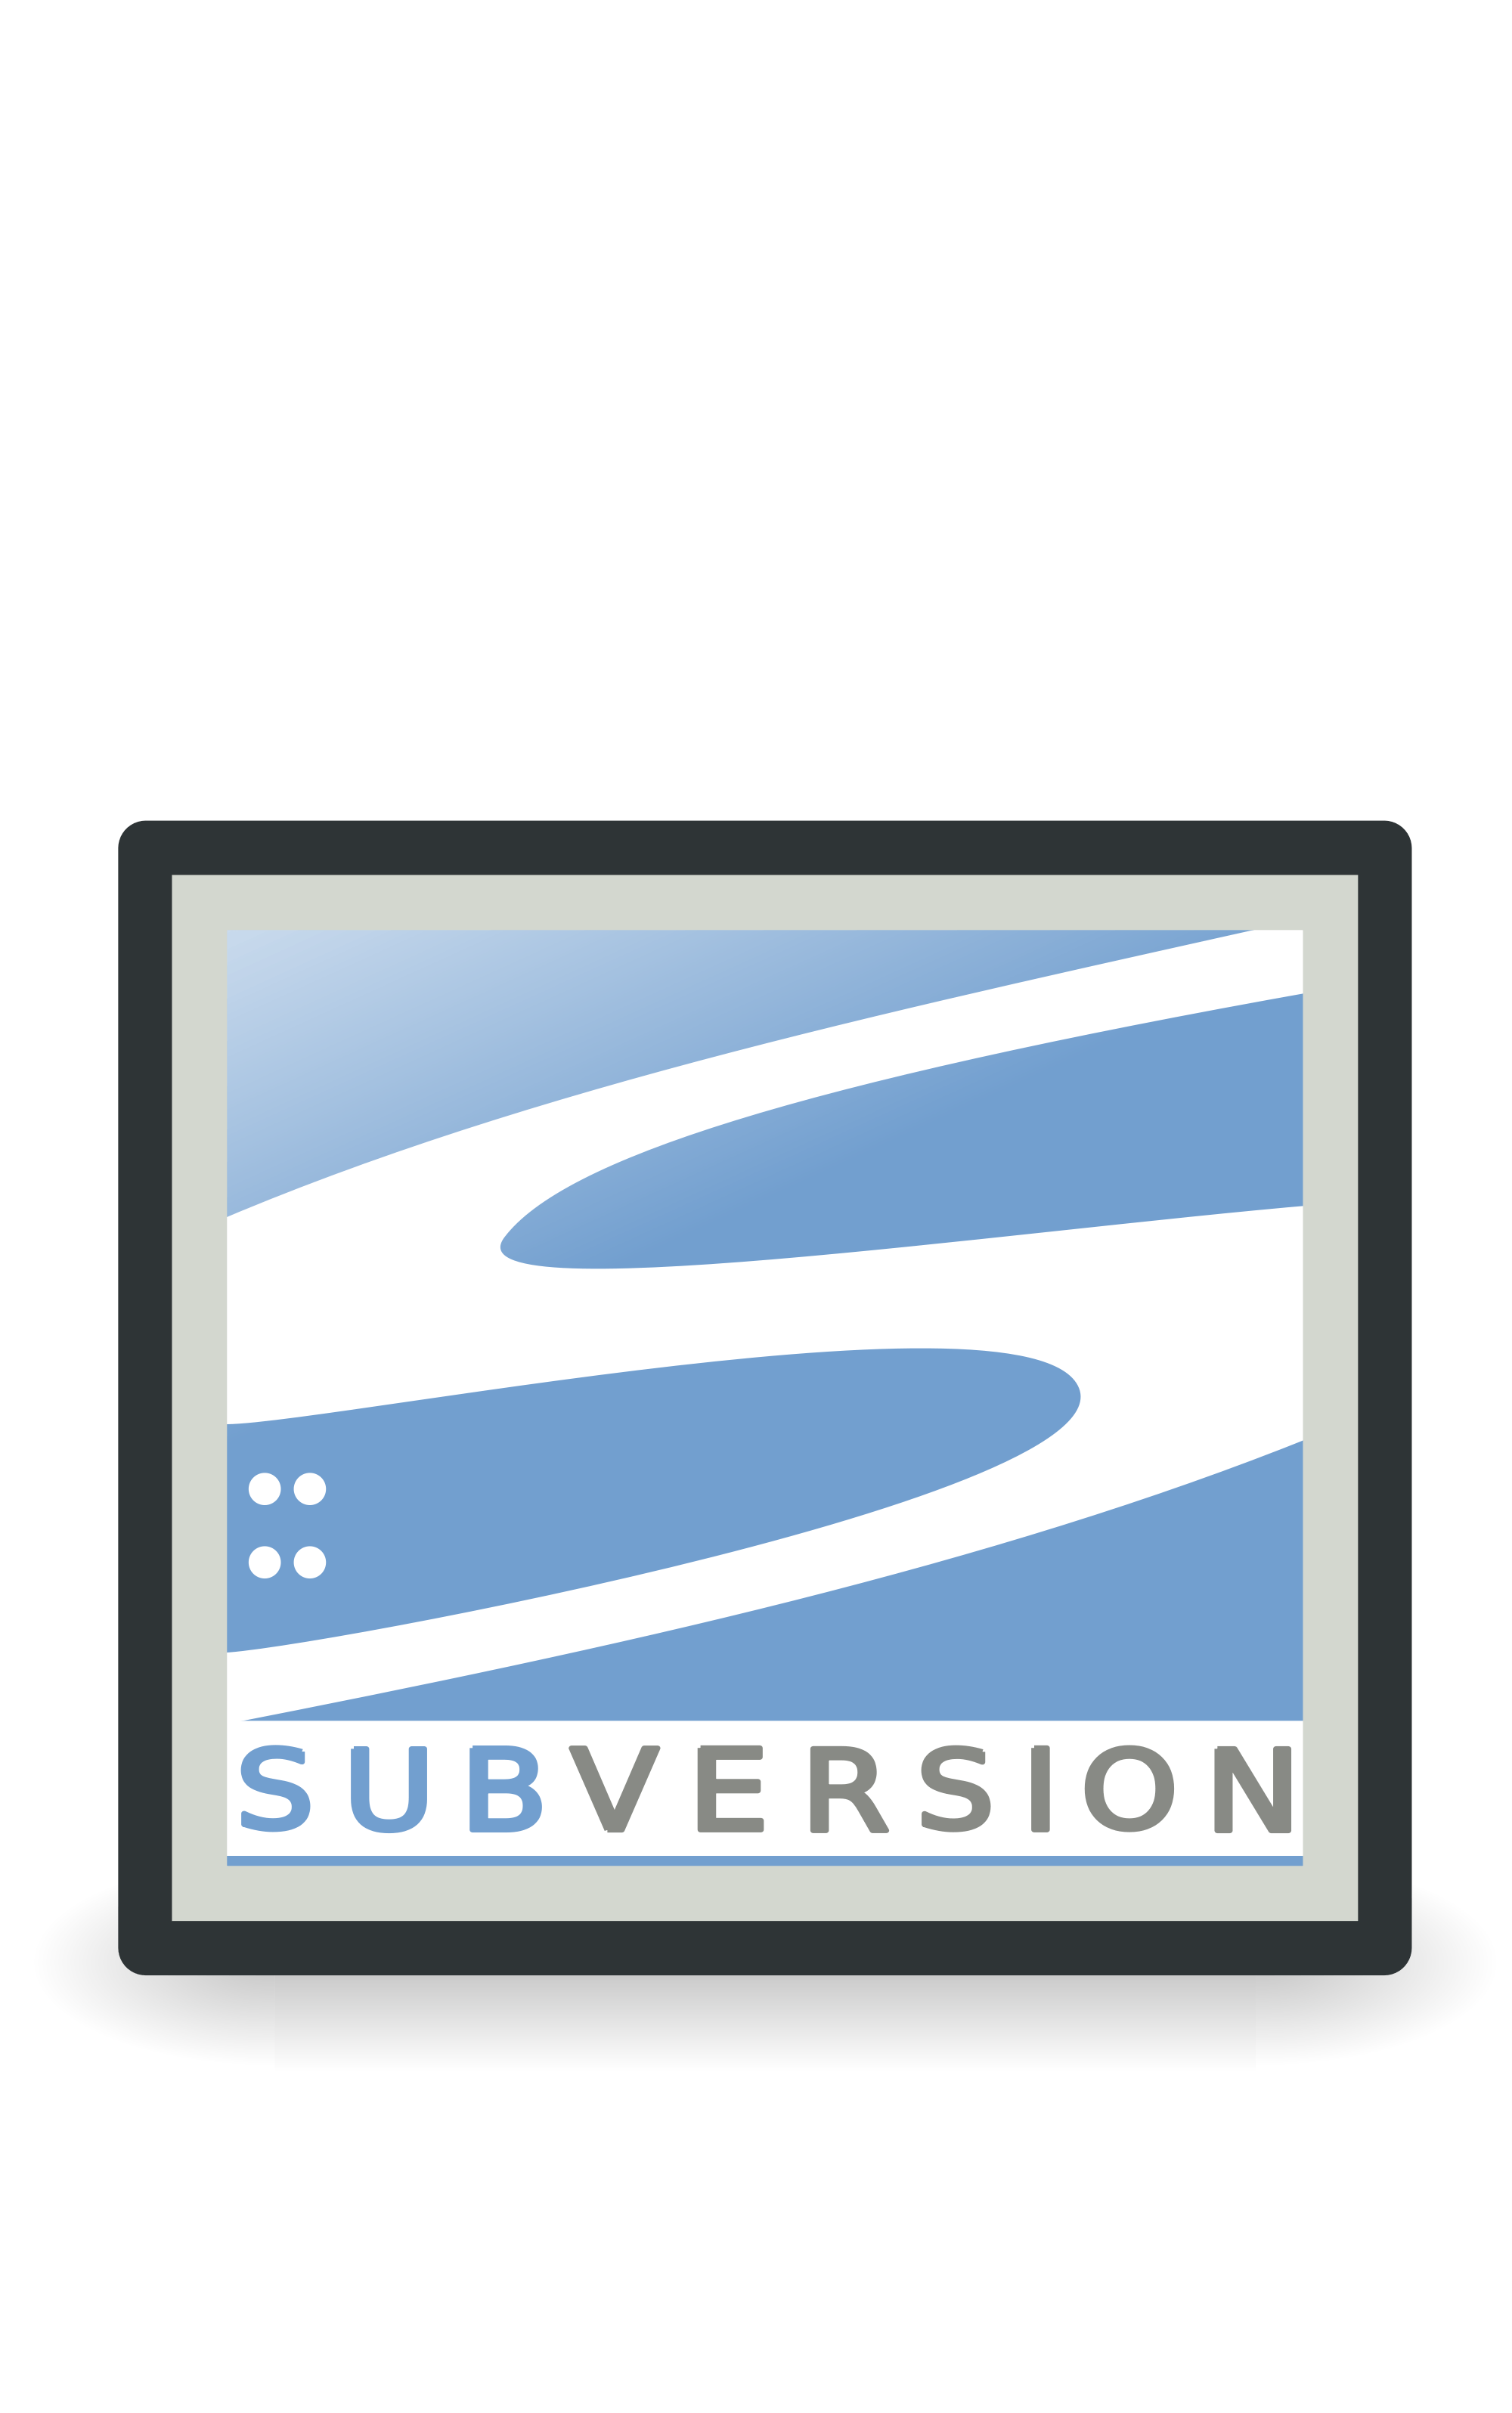 Subversion Logo - File:Subversion-logo.svg - Wikimedia Commons